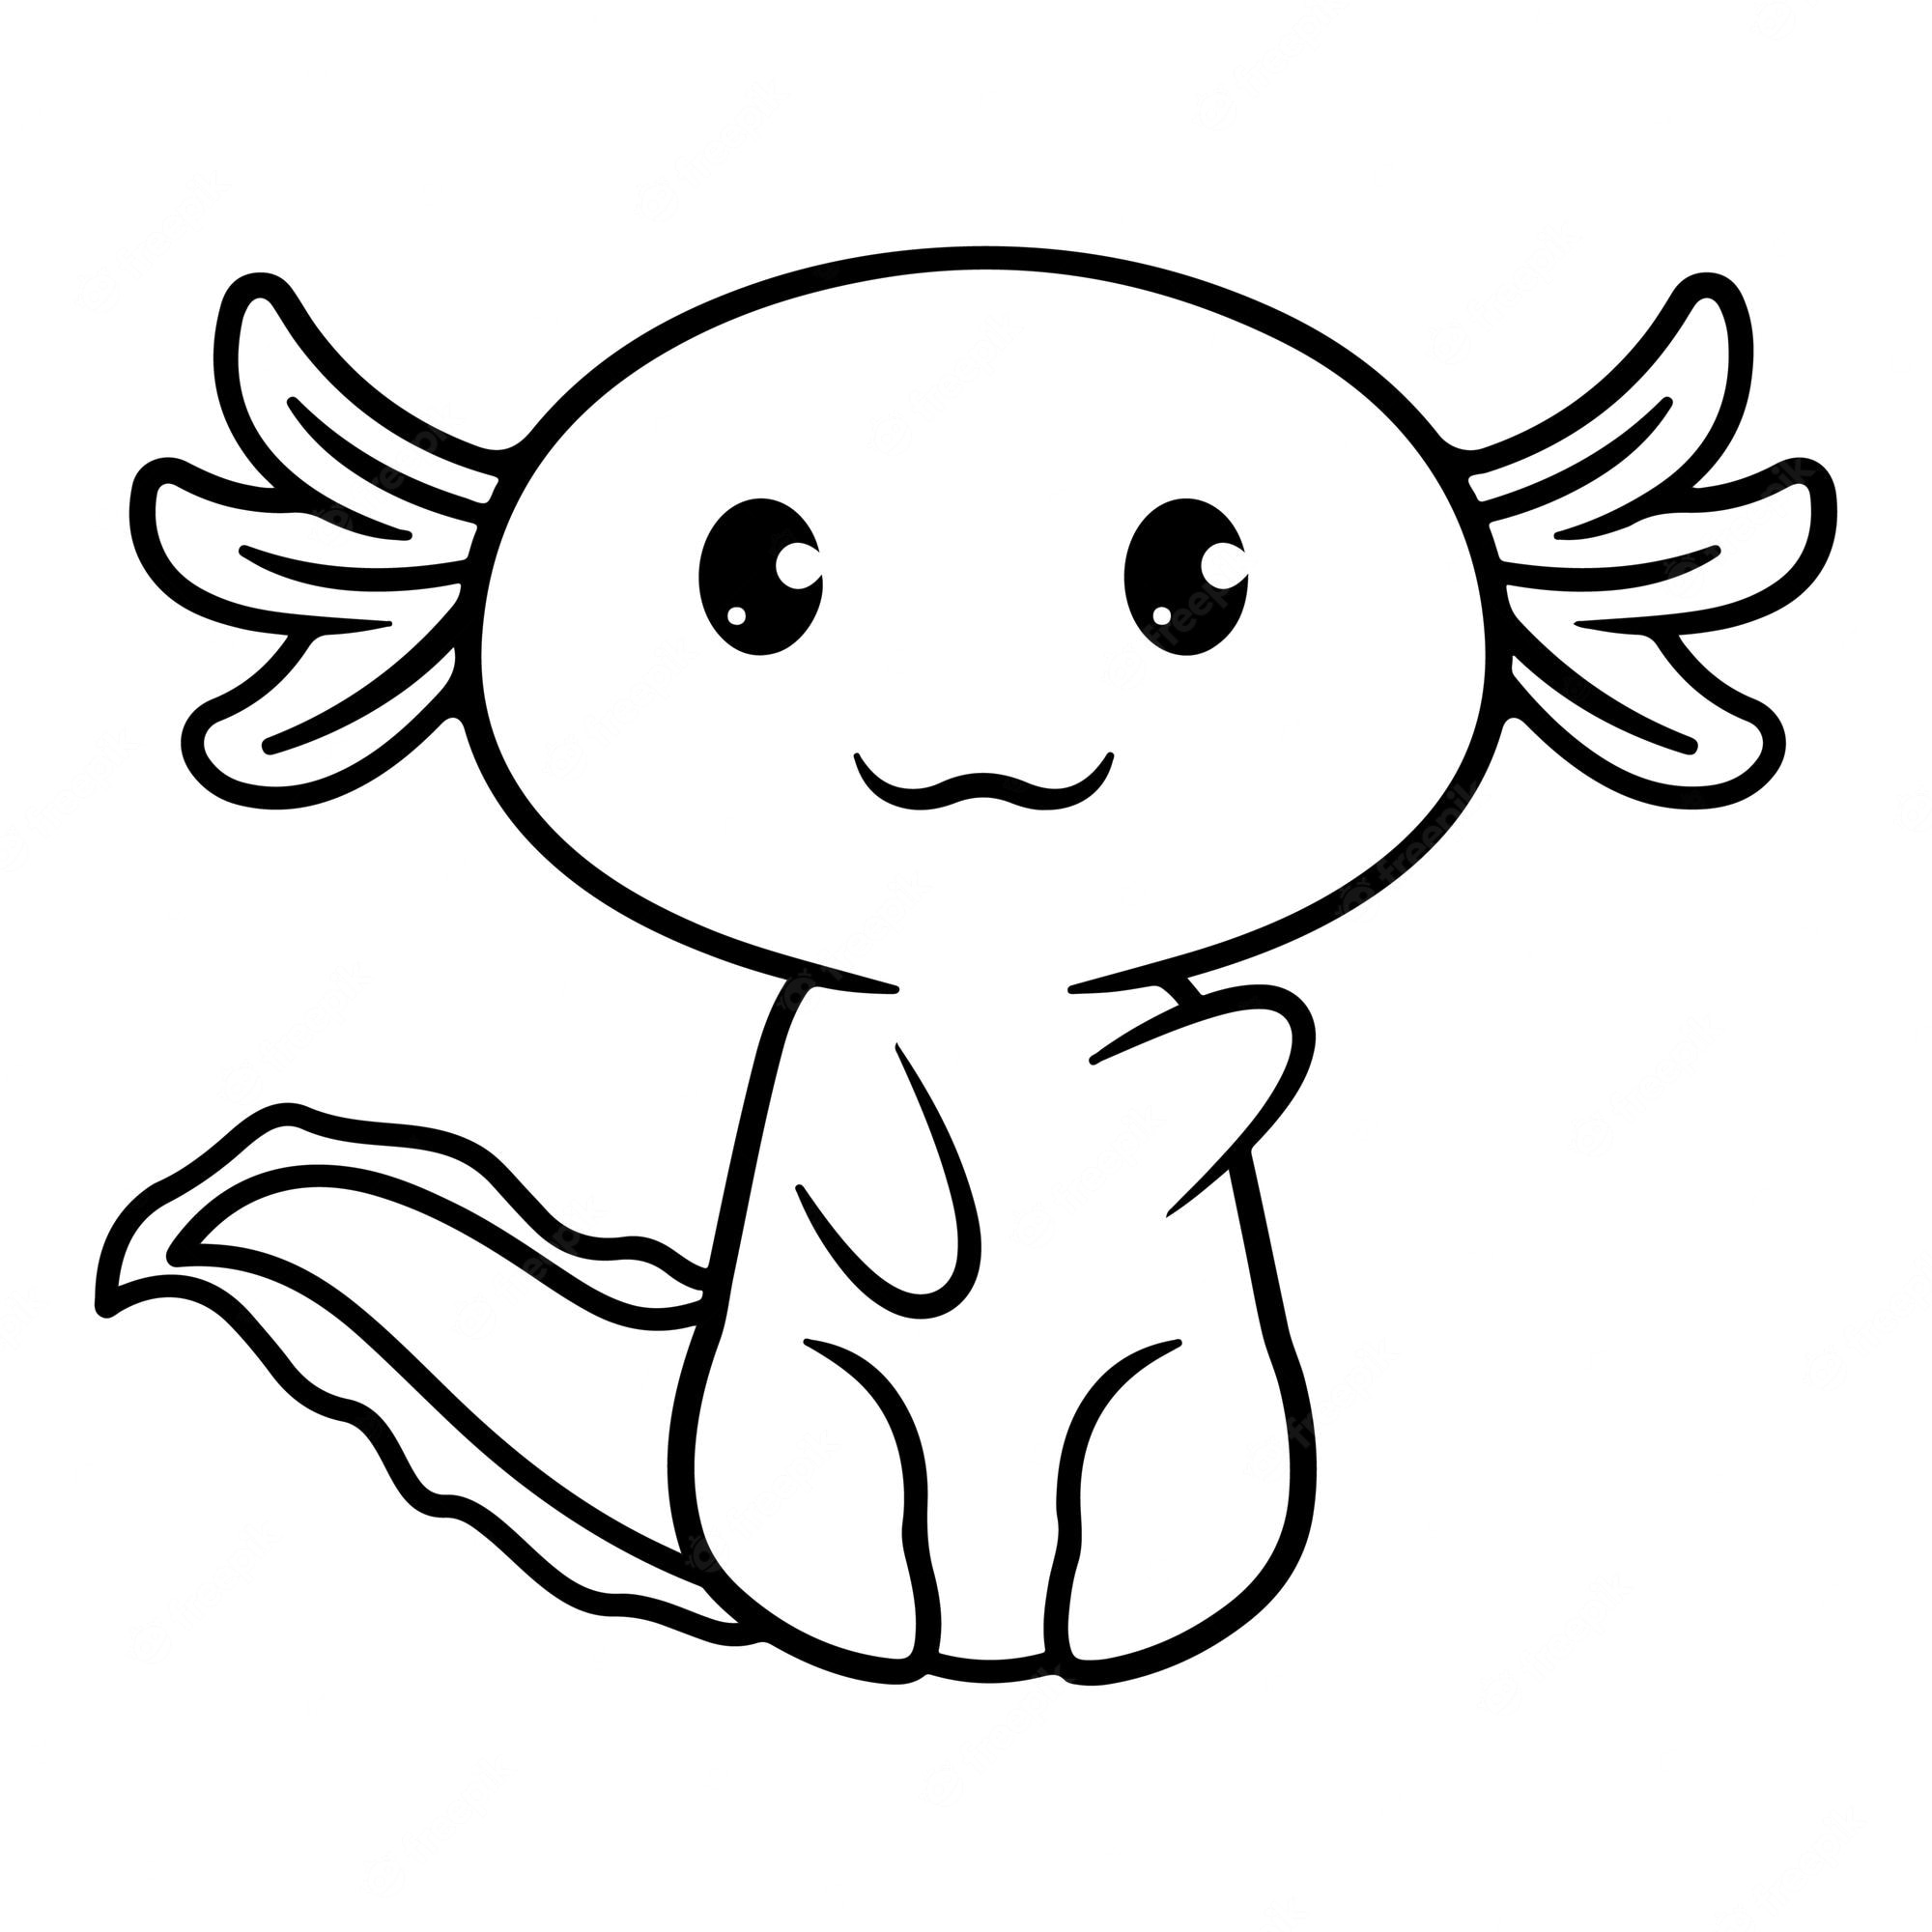 Premium Vector | Axolotl coloring pages for kids premium vector